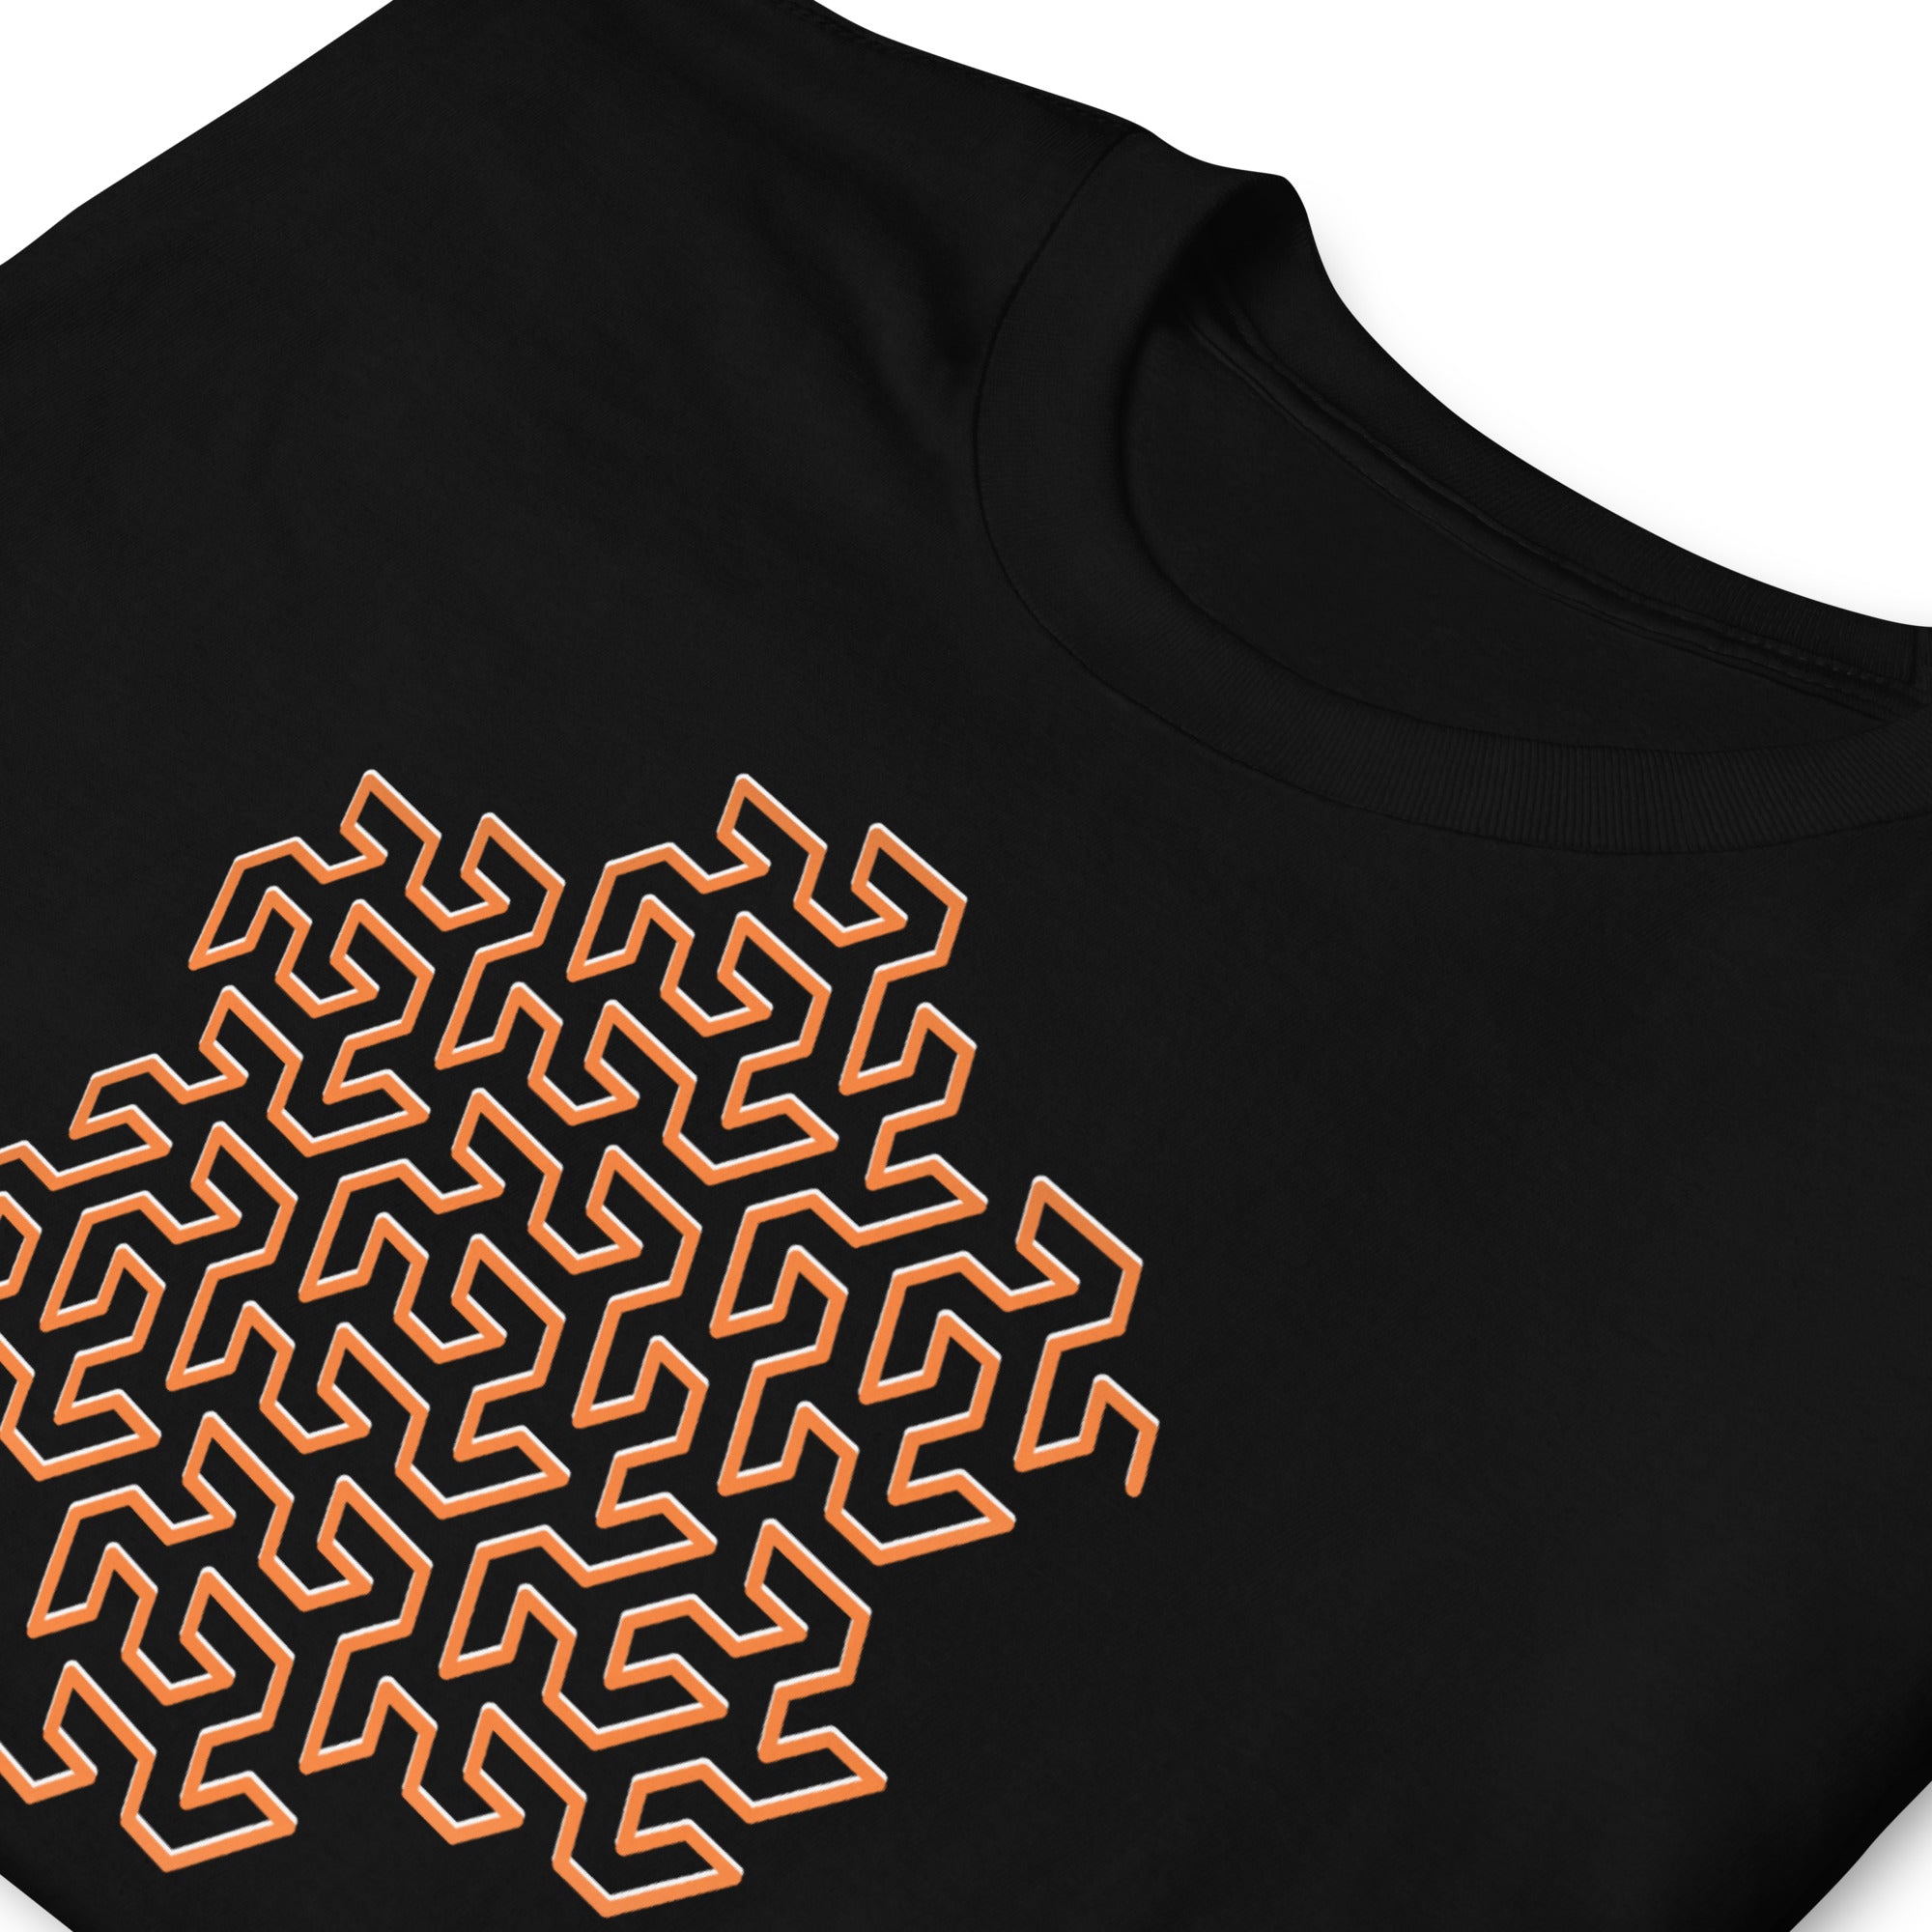 L-System - hexagon gosper curve tshirt